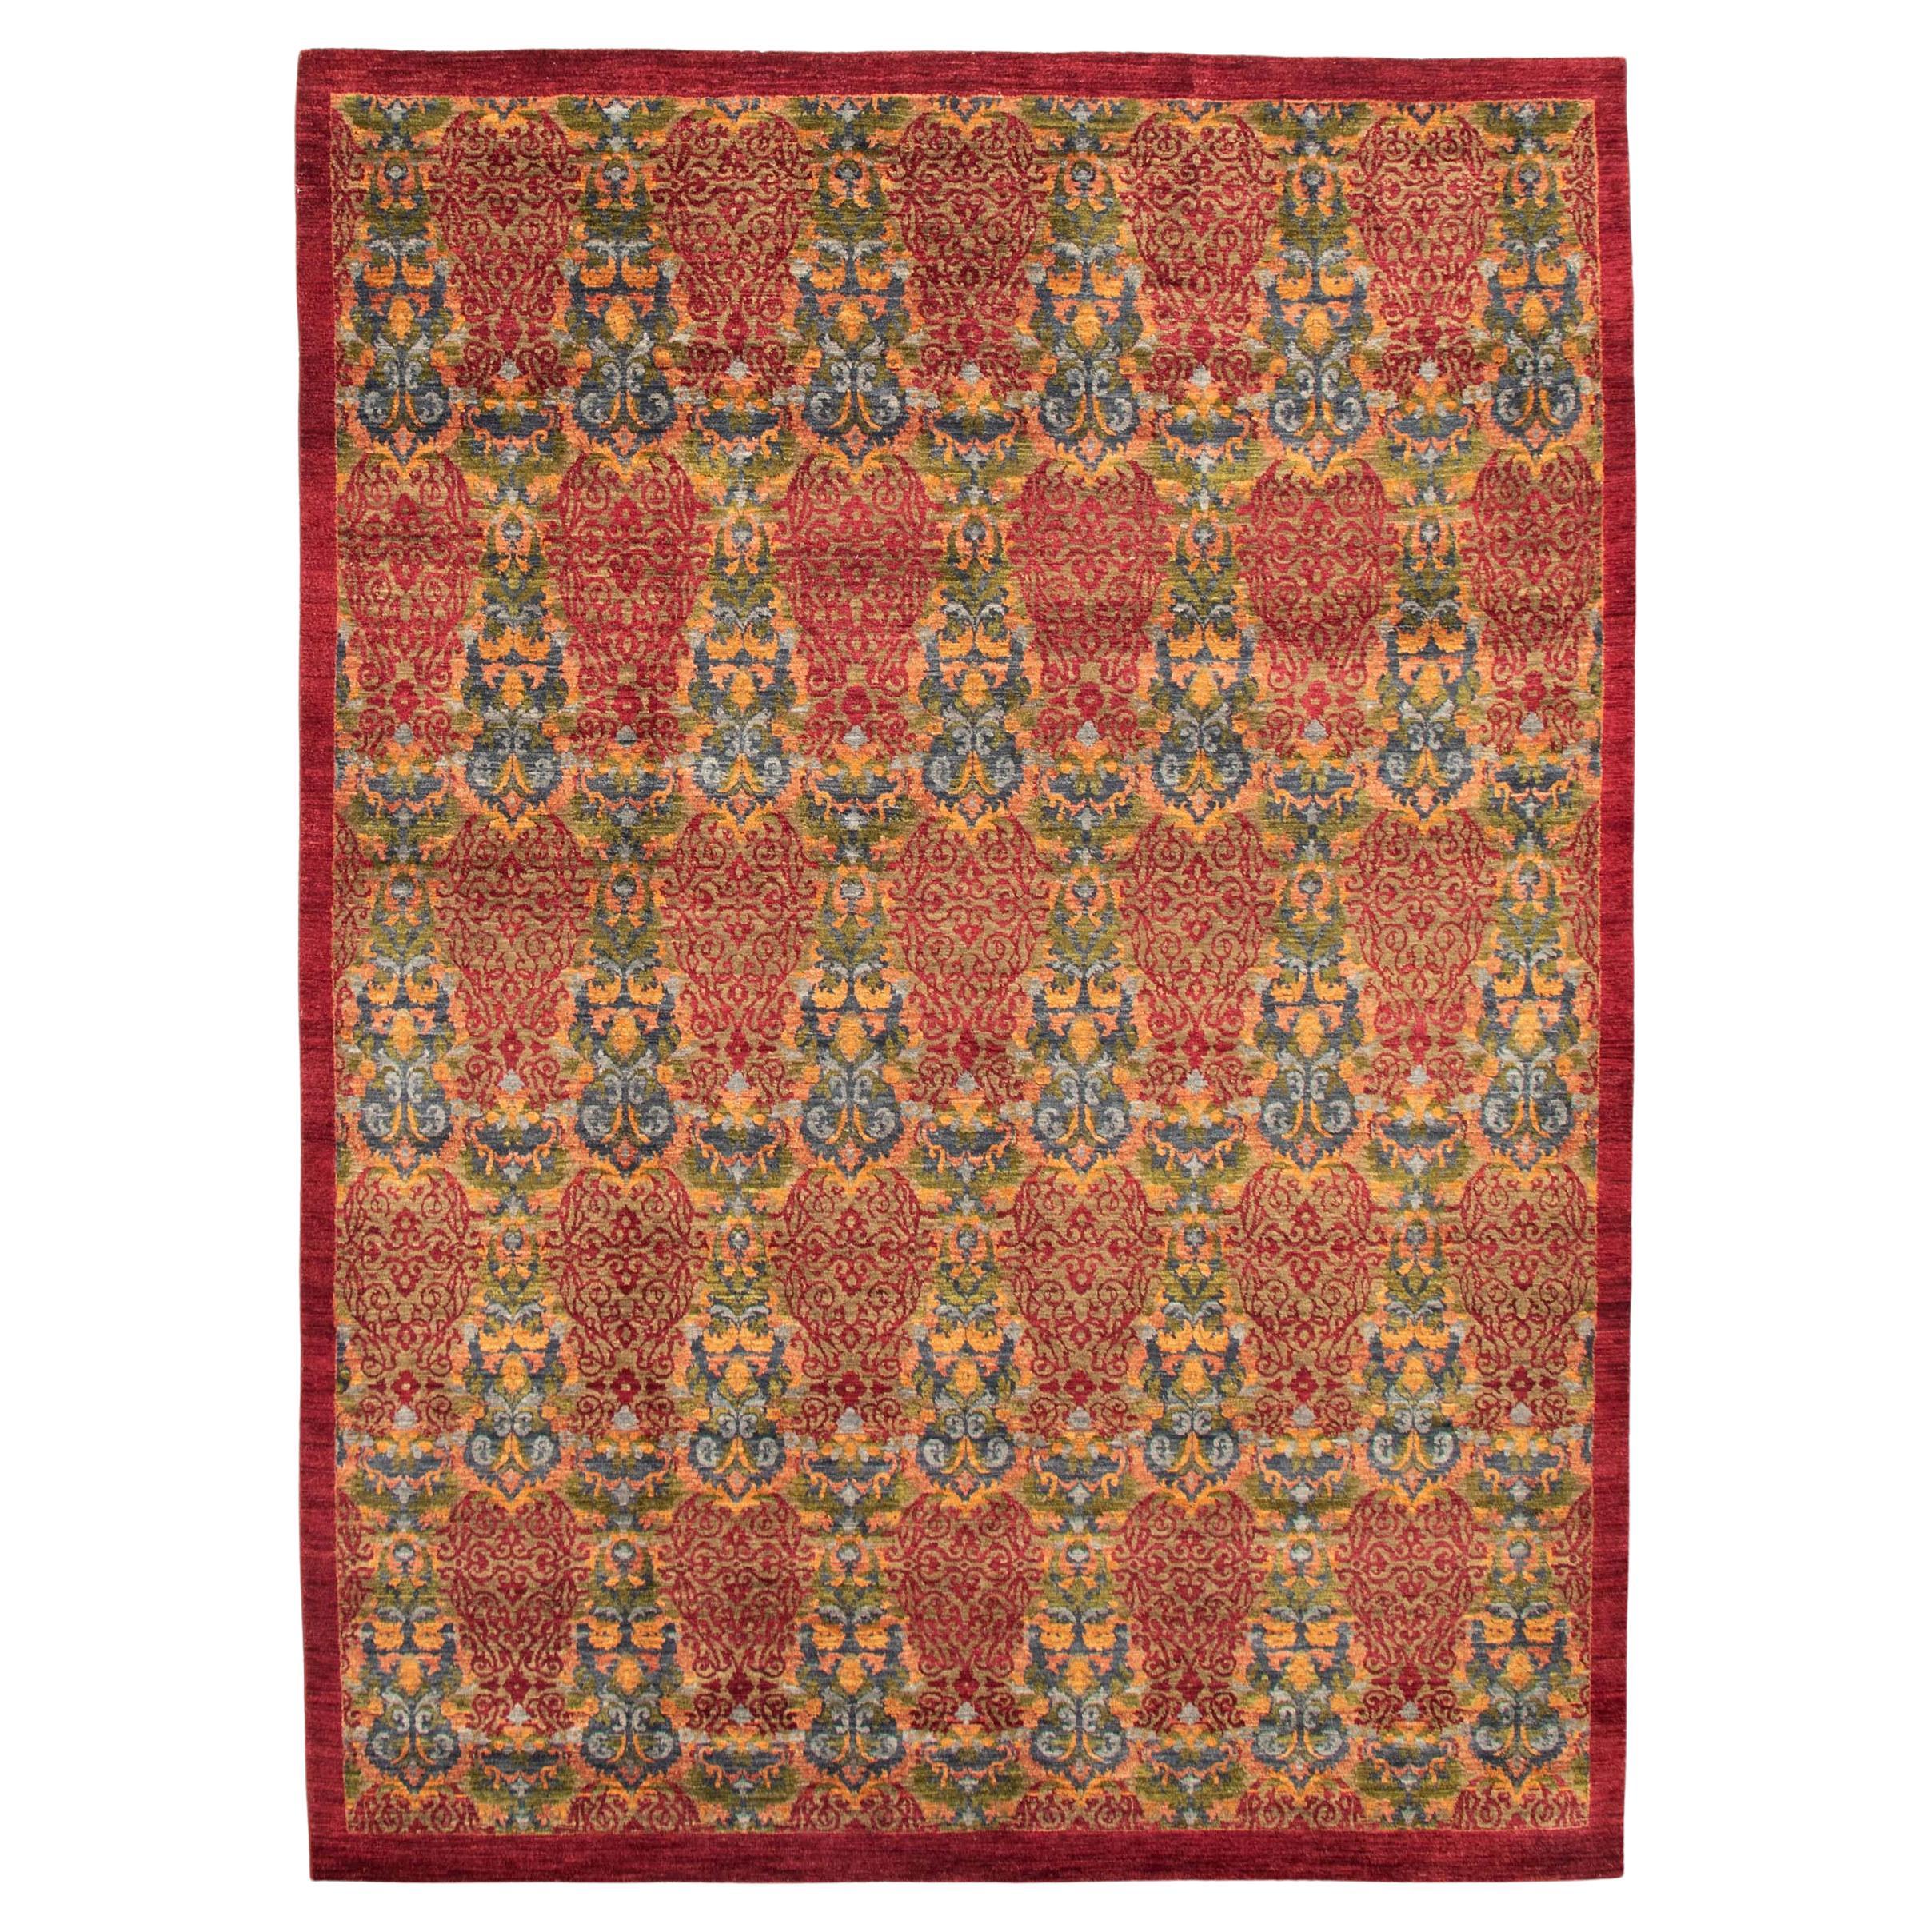 Lahore Teppich, Transitional, Rot, Taupe, Blau und Grün, Wolle, 8' x 10'